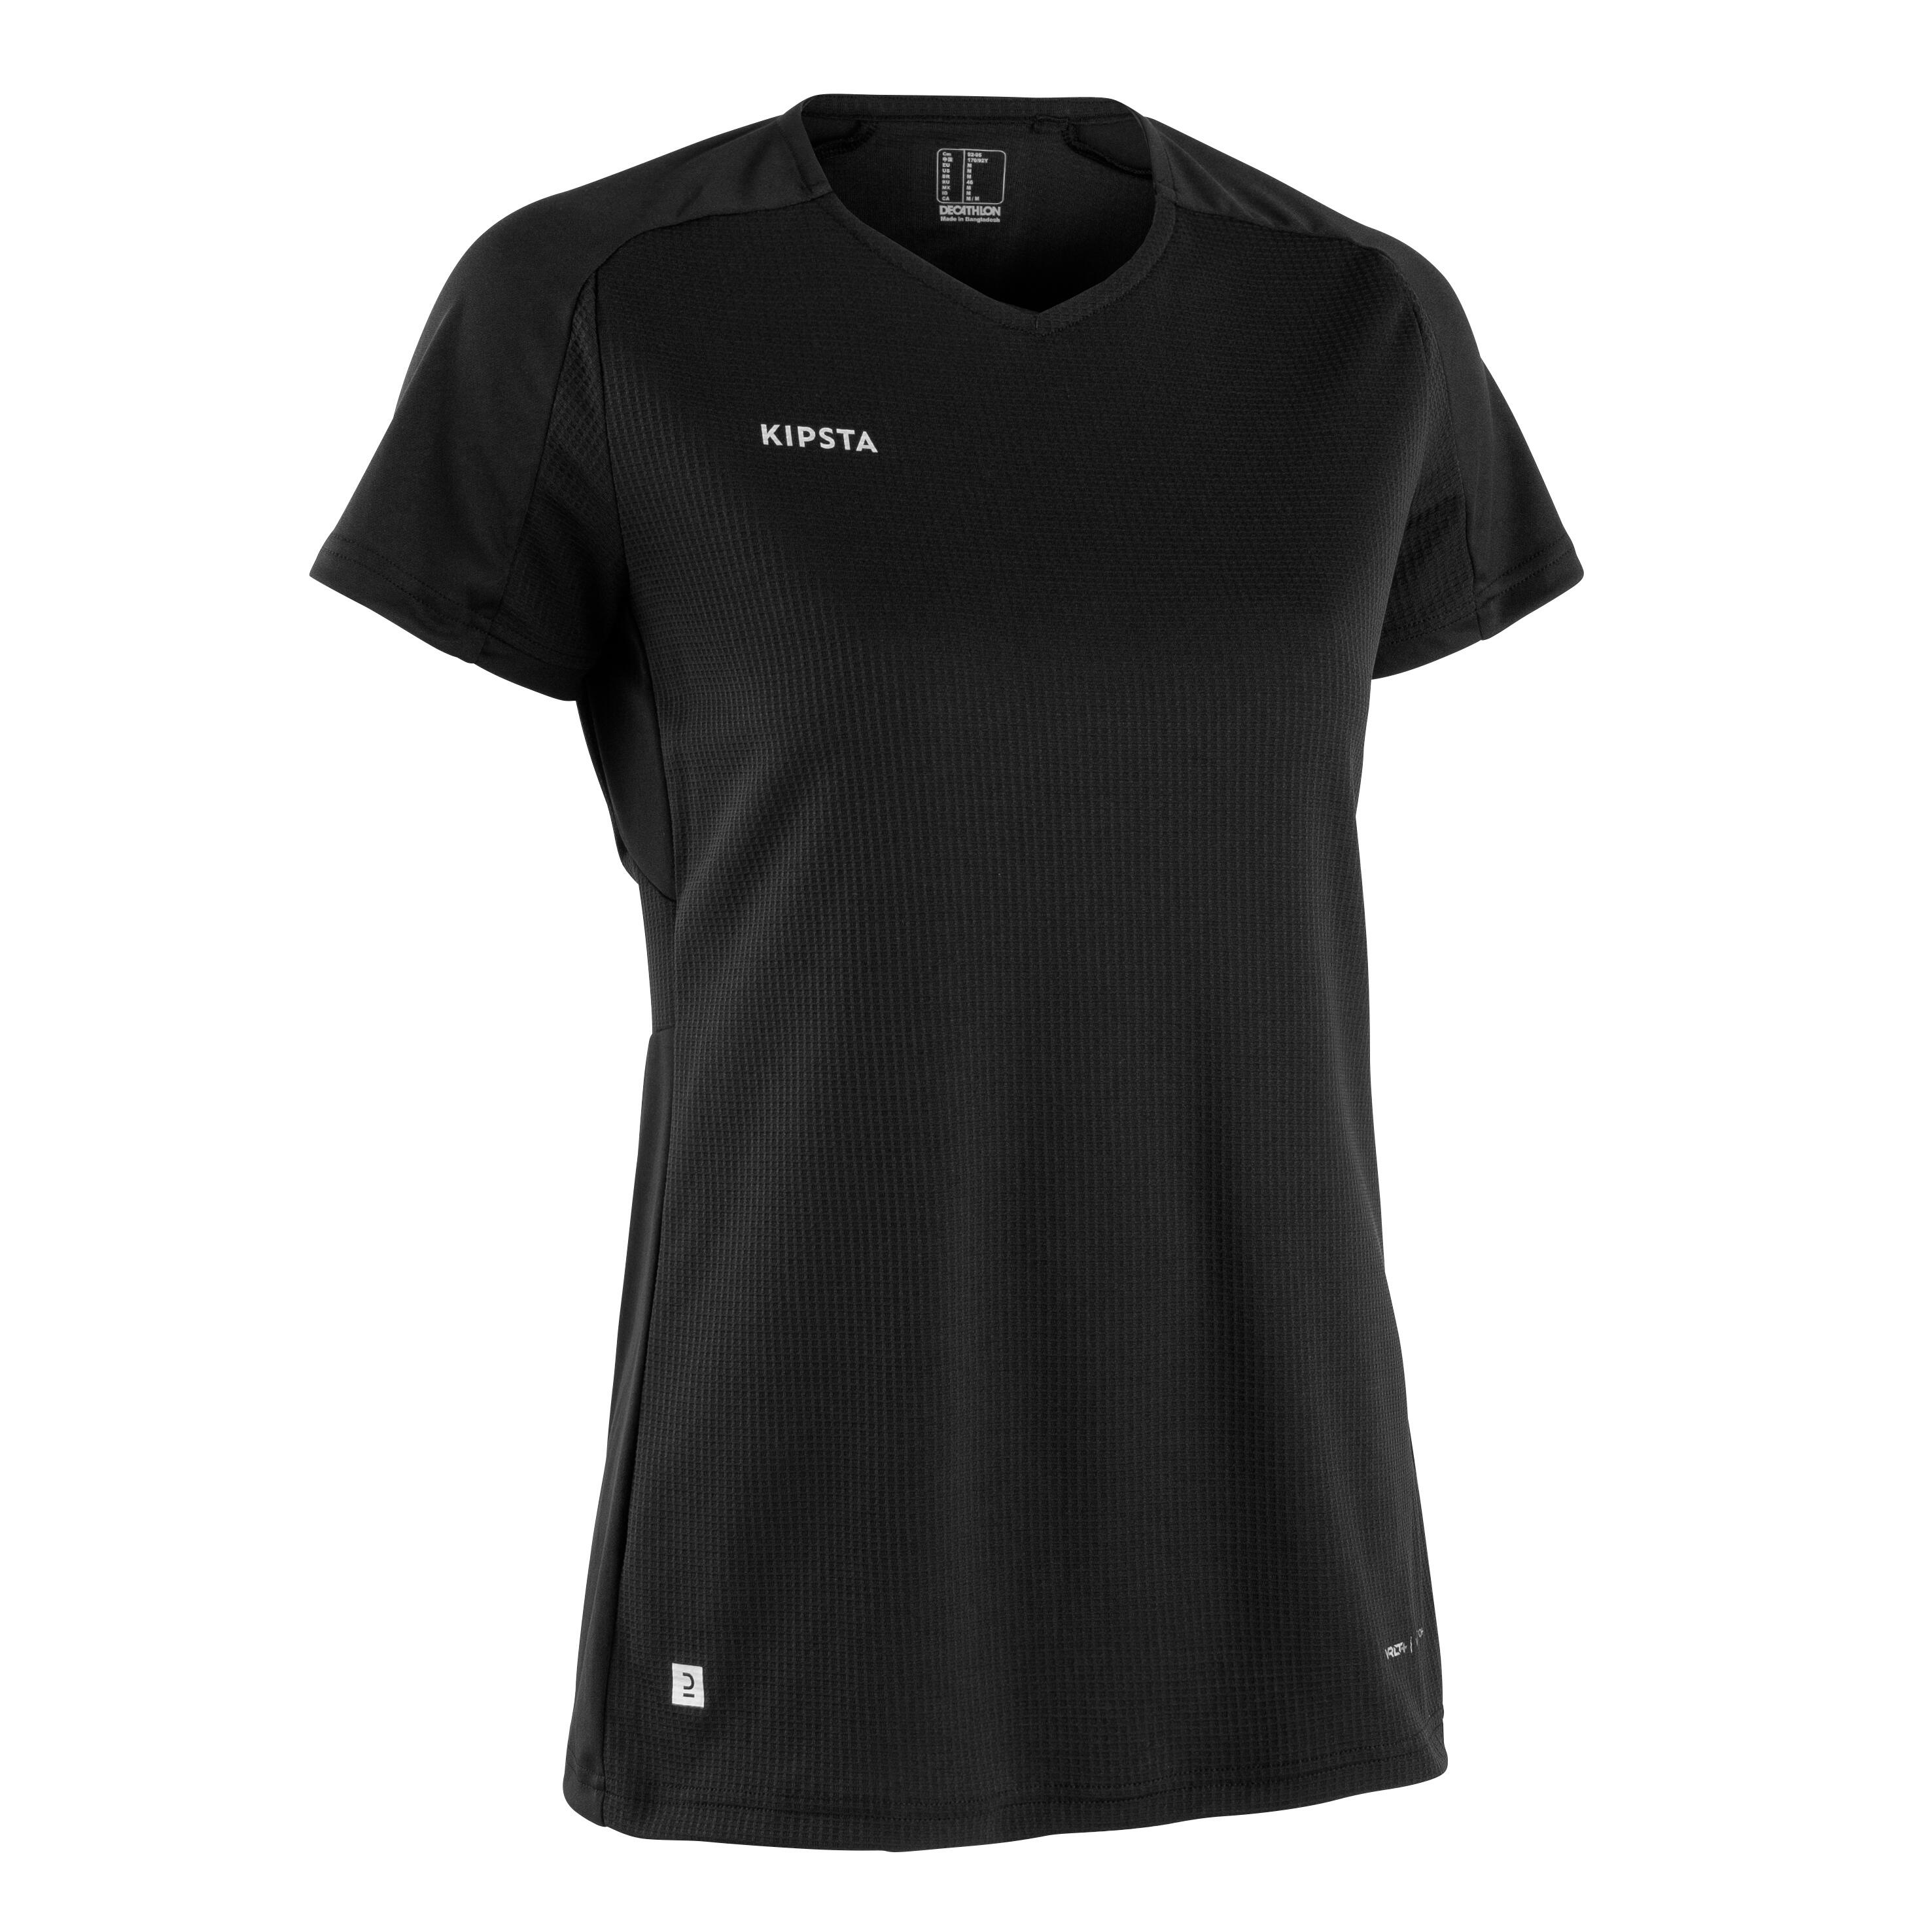 KIPSTA Women's Plain Football Shirt - Black